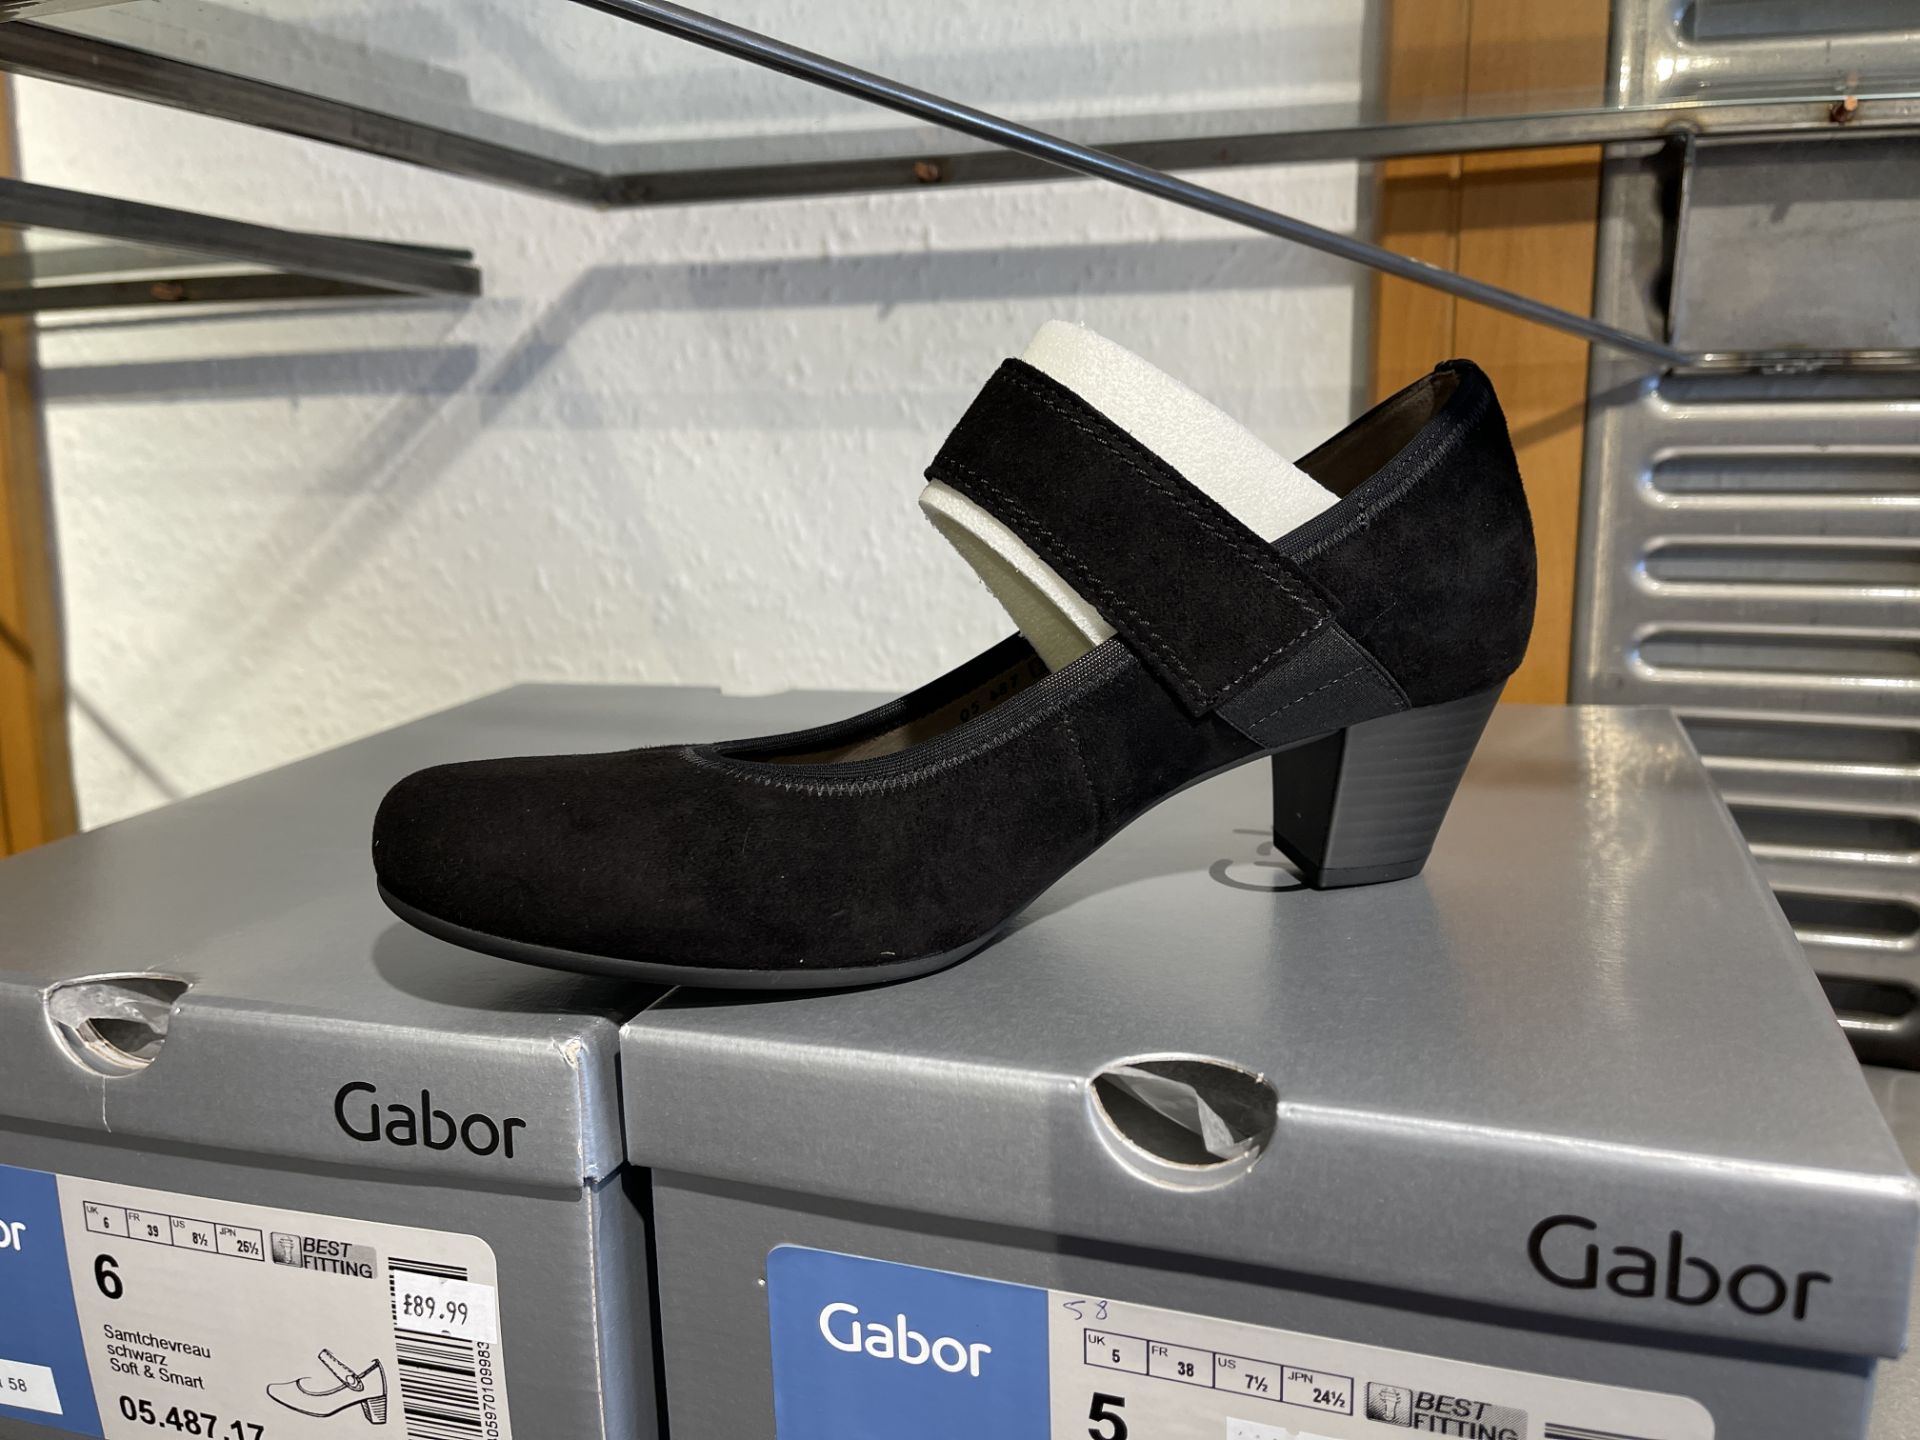 Gabor 8 Pairs: Samtchevreau Schwarz Soft & Smart Shoes 05.487.17. Sizes 4 - 7.5 (RRP £89.99) Gabor 5 - Image 4 of 14